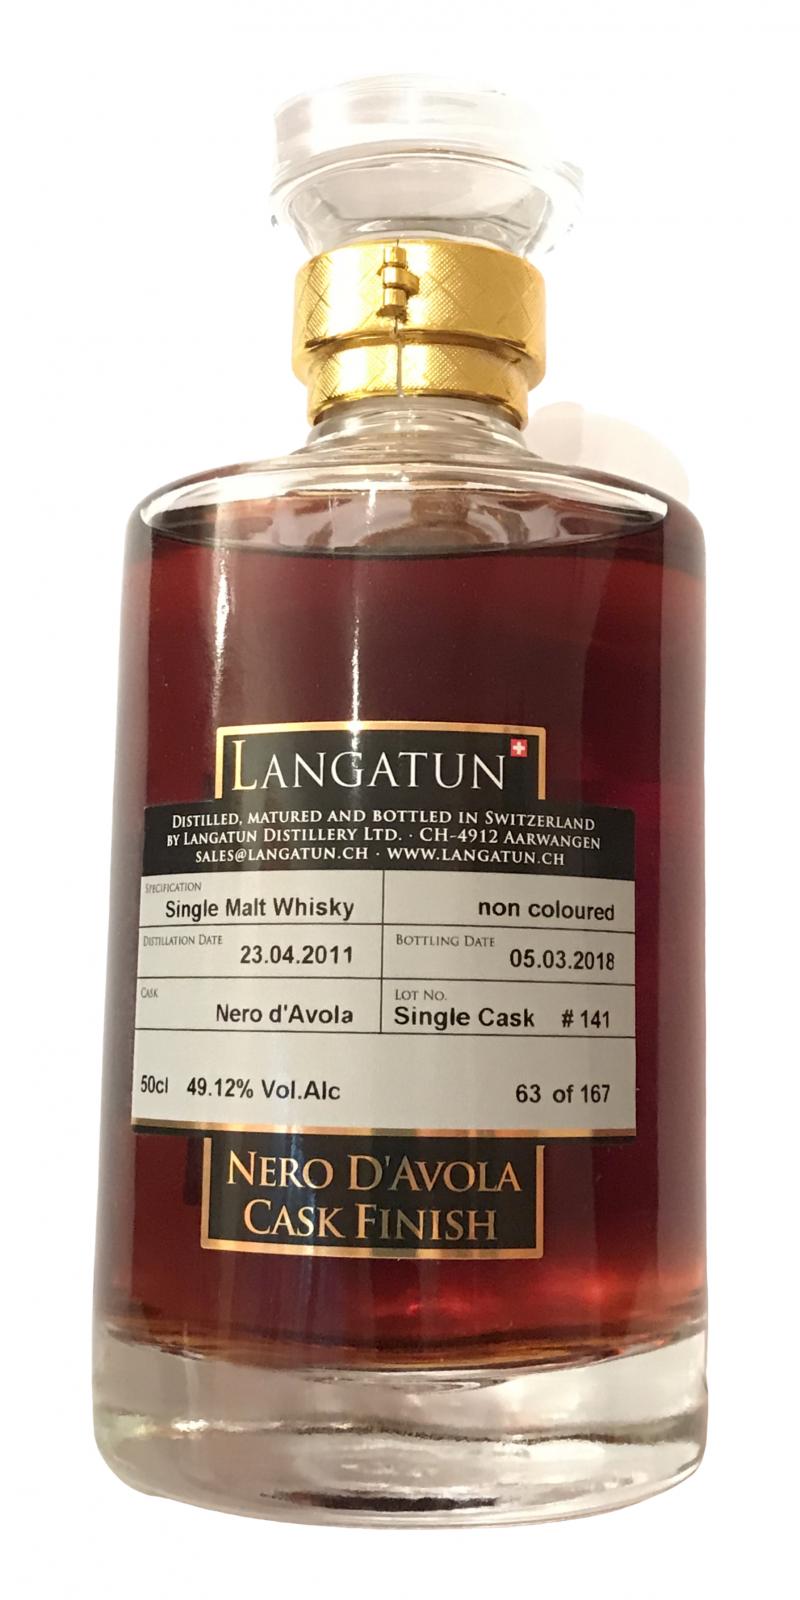 BUY] Langatun Nero d'Avola 2018 Release Single Malt Whisky